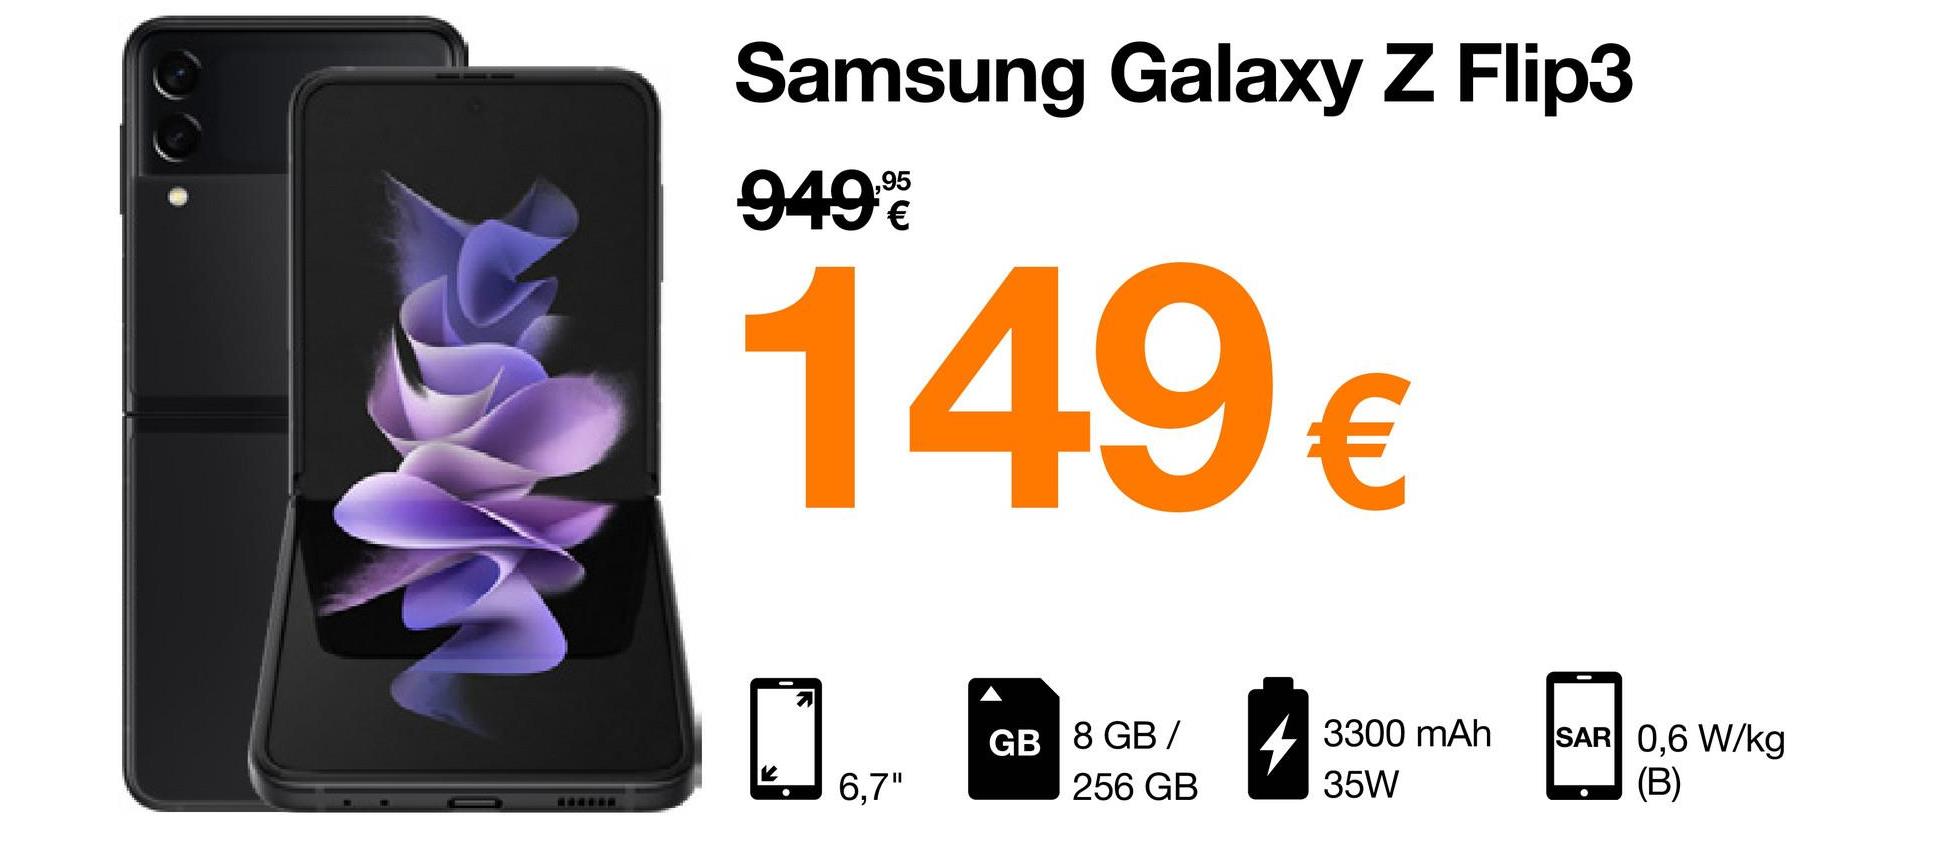 CAREER
Samsung Galaxy Z Flip3
9499
149€
GB 8 GB /
256 GB
6,7"
3300 mAh
35W
SAR 0,6 W/kg
(B)